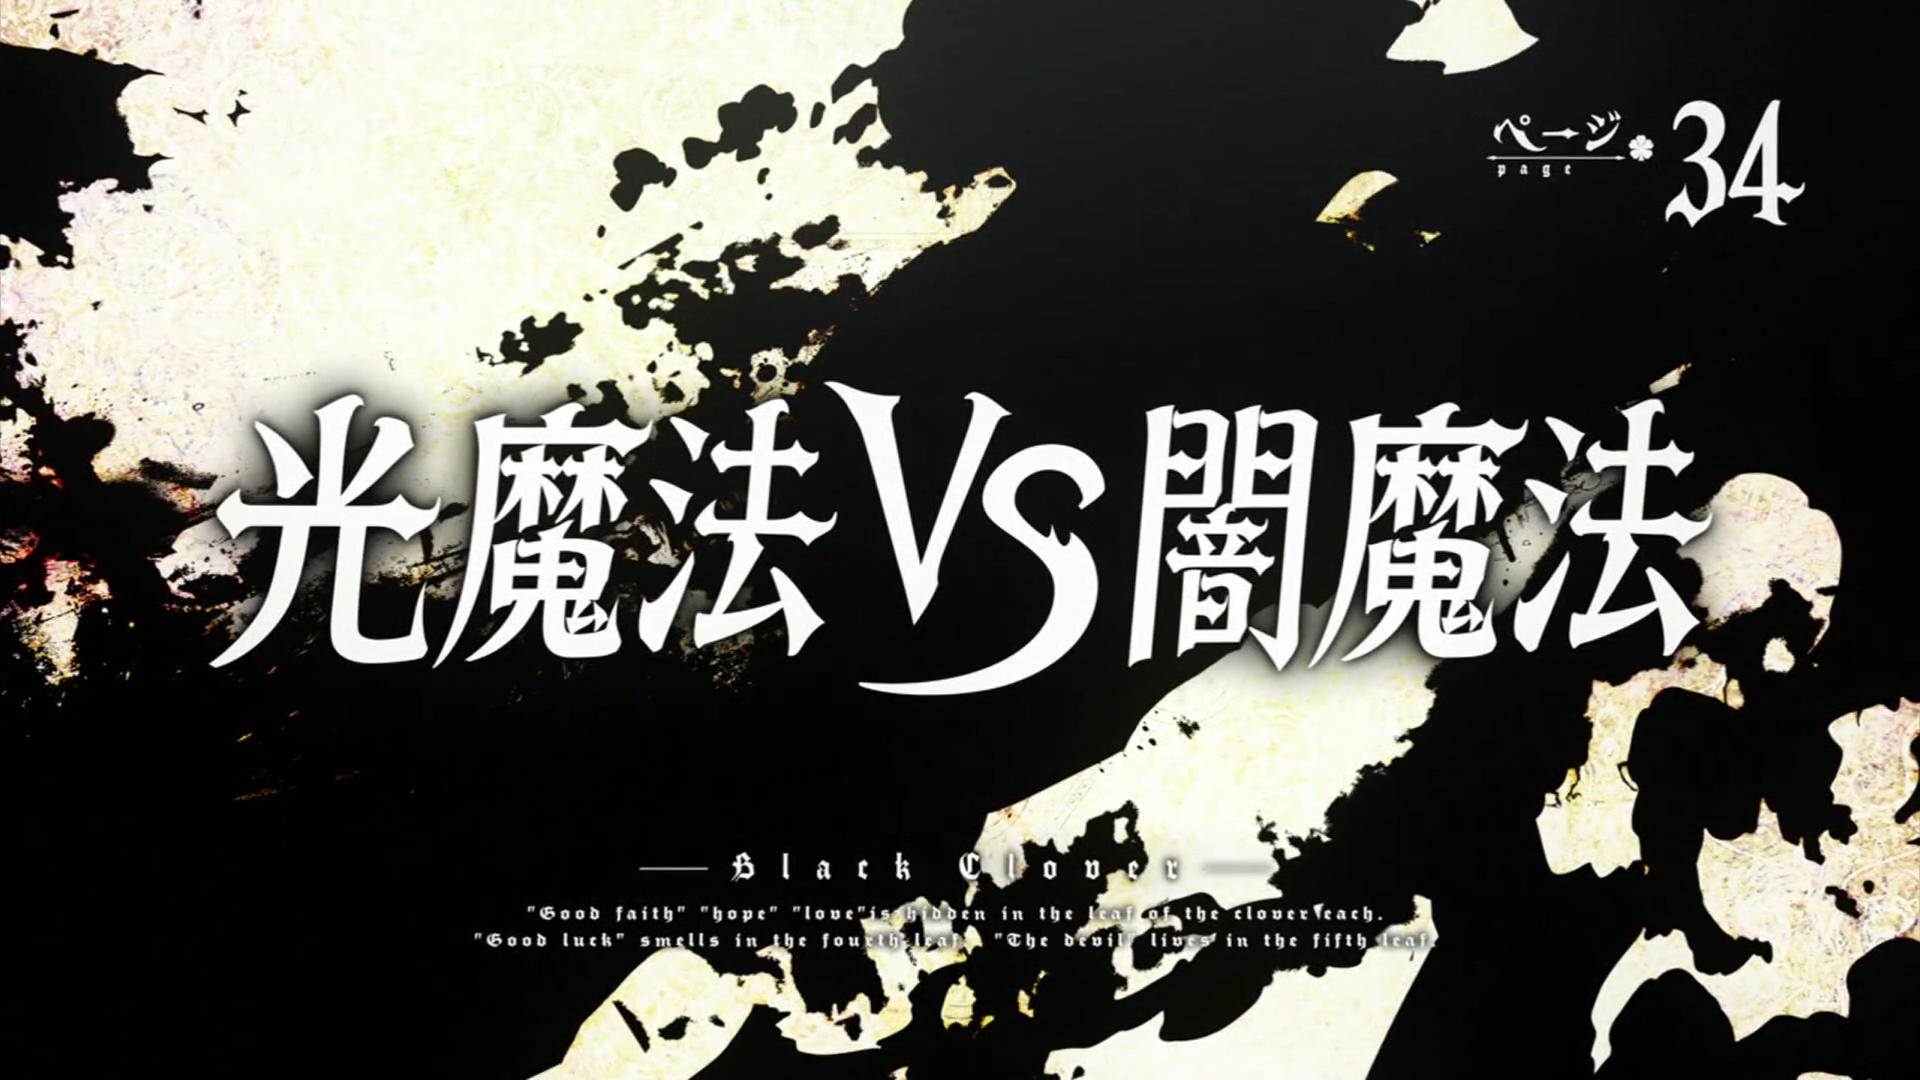 Black Clover Episode 4- Finally, Some Hope – AnimeAndFandomLife